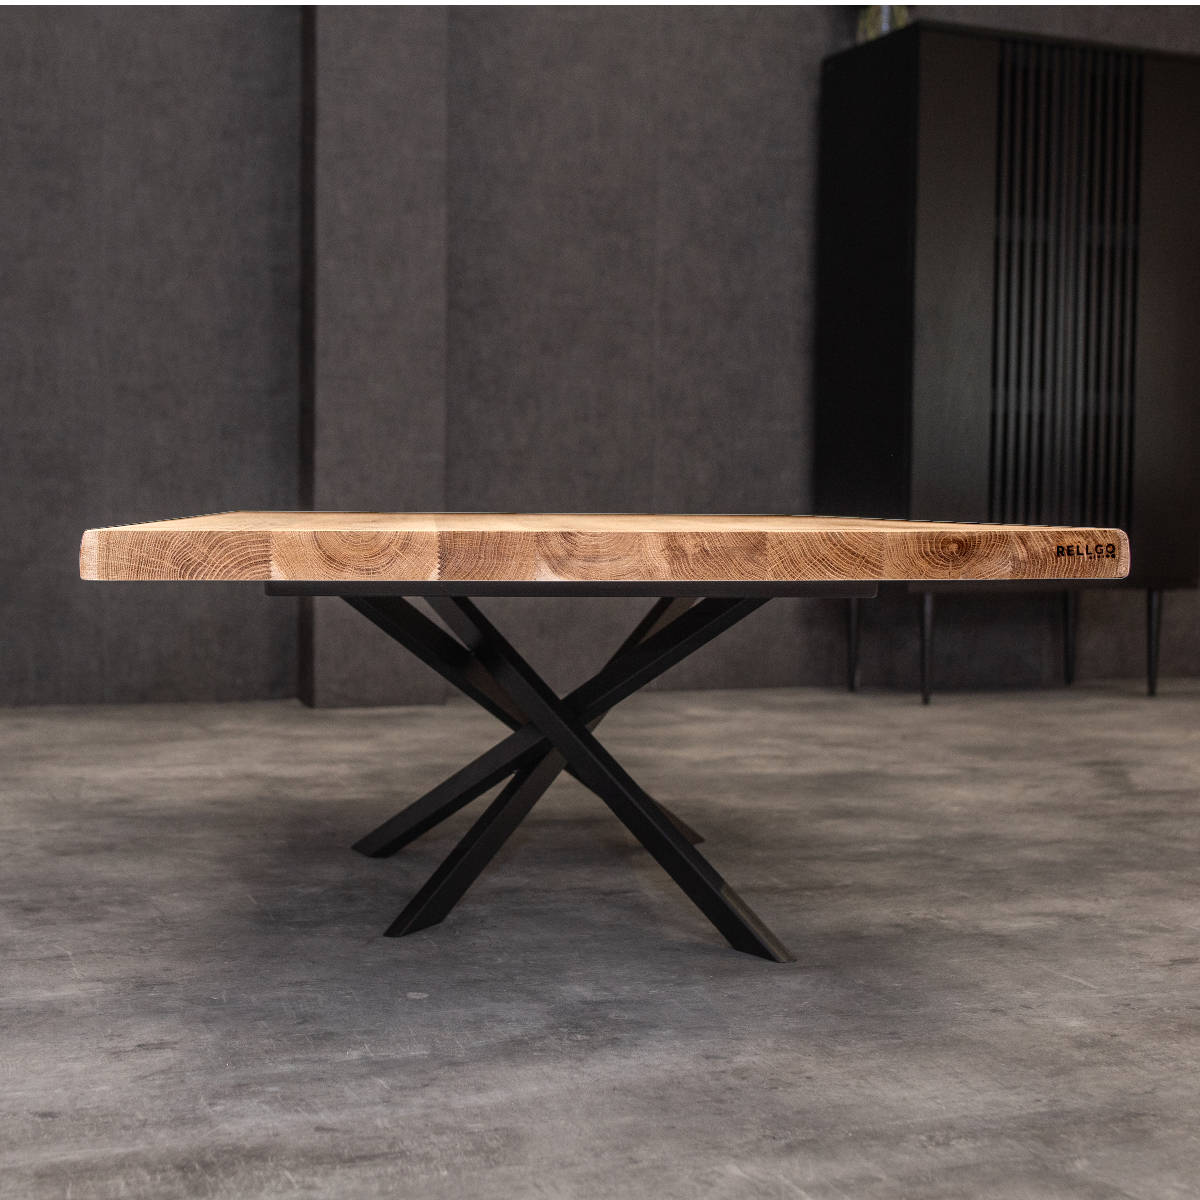 Saron coffee table 120x80cm